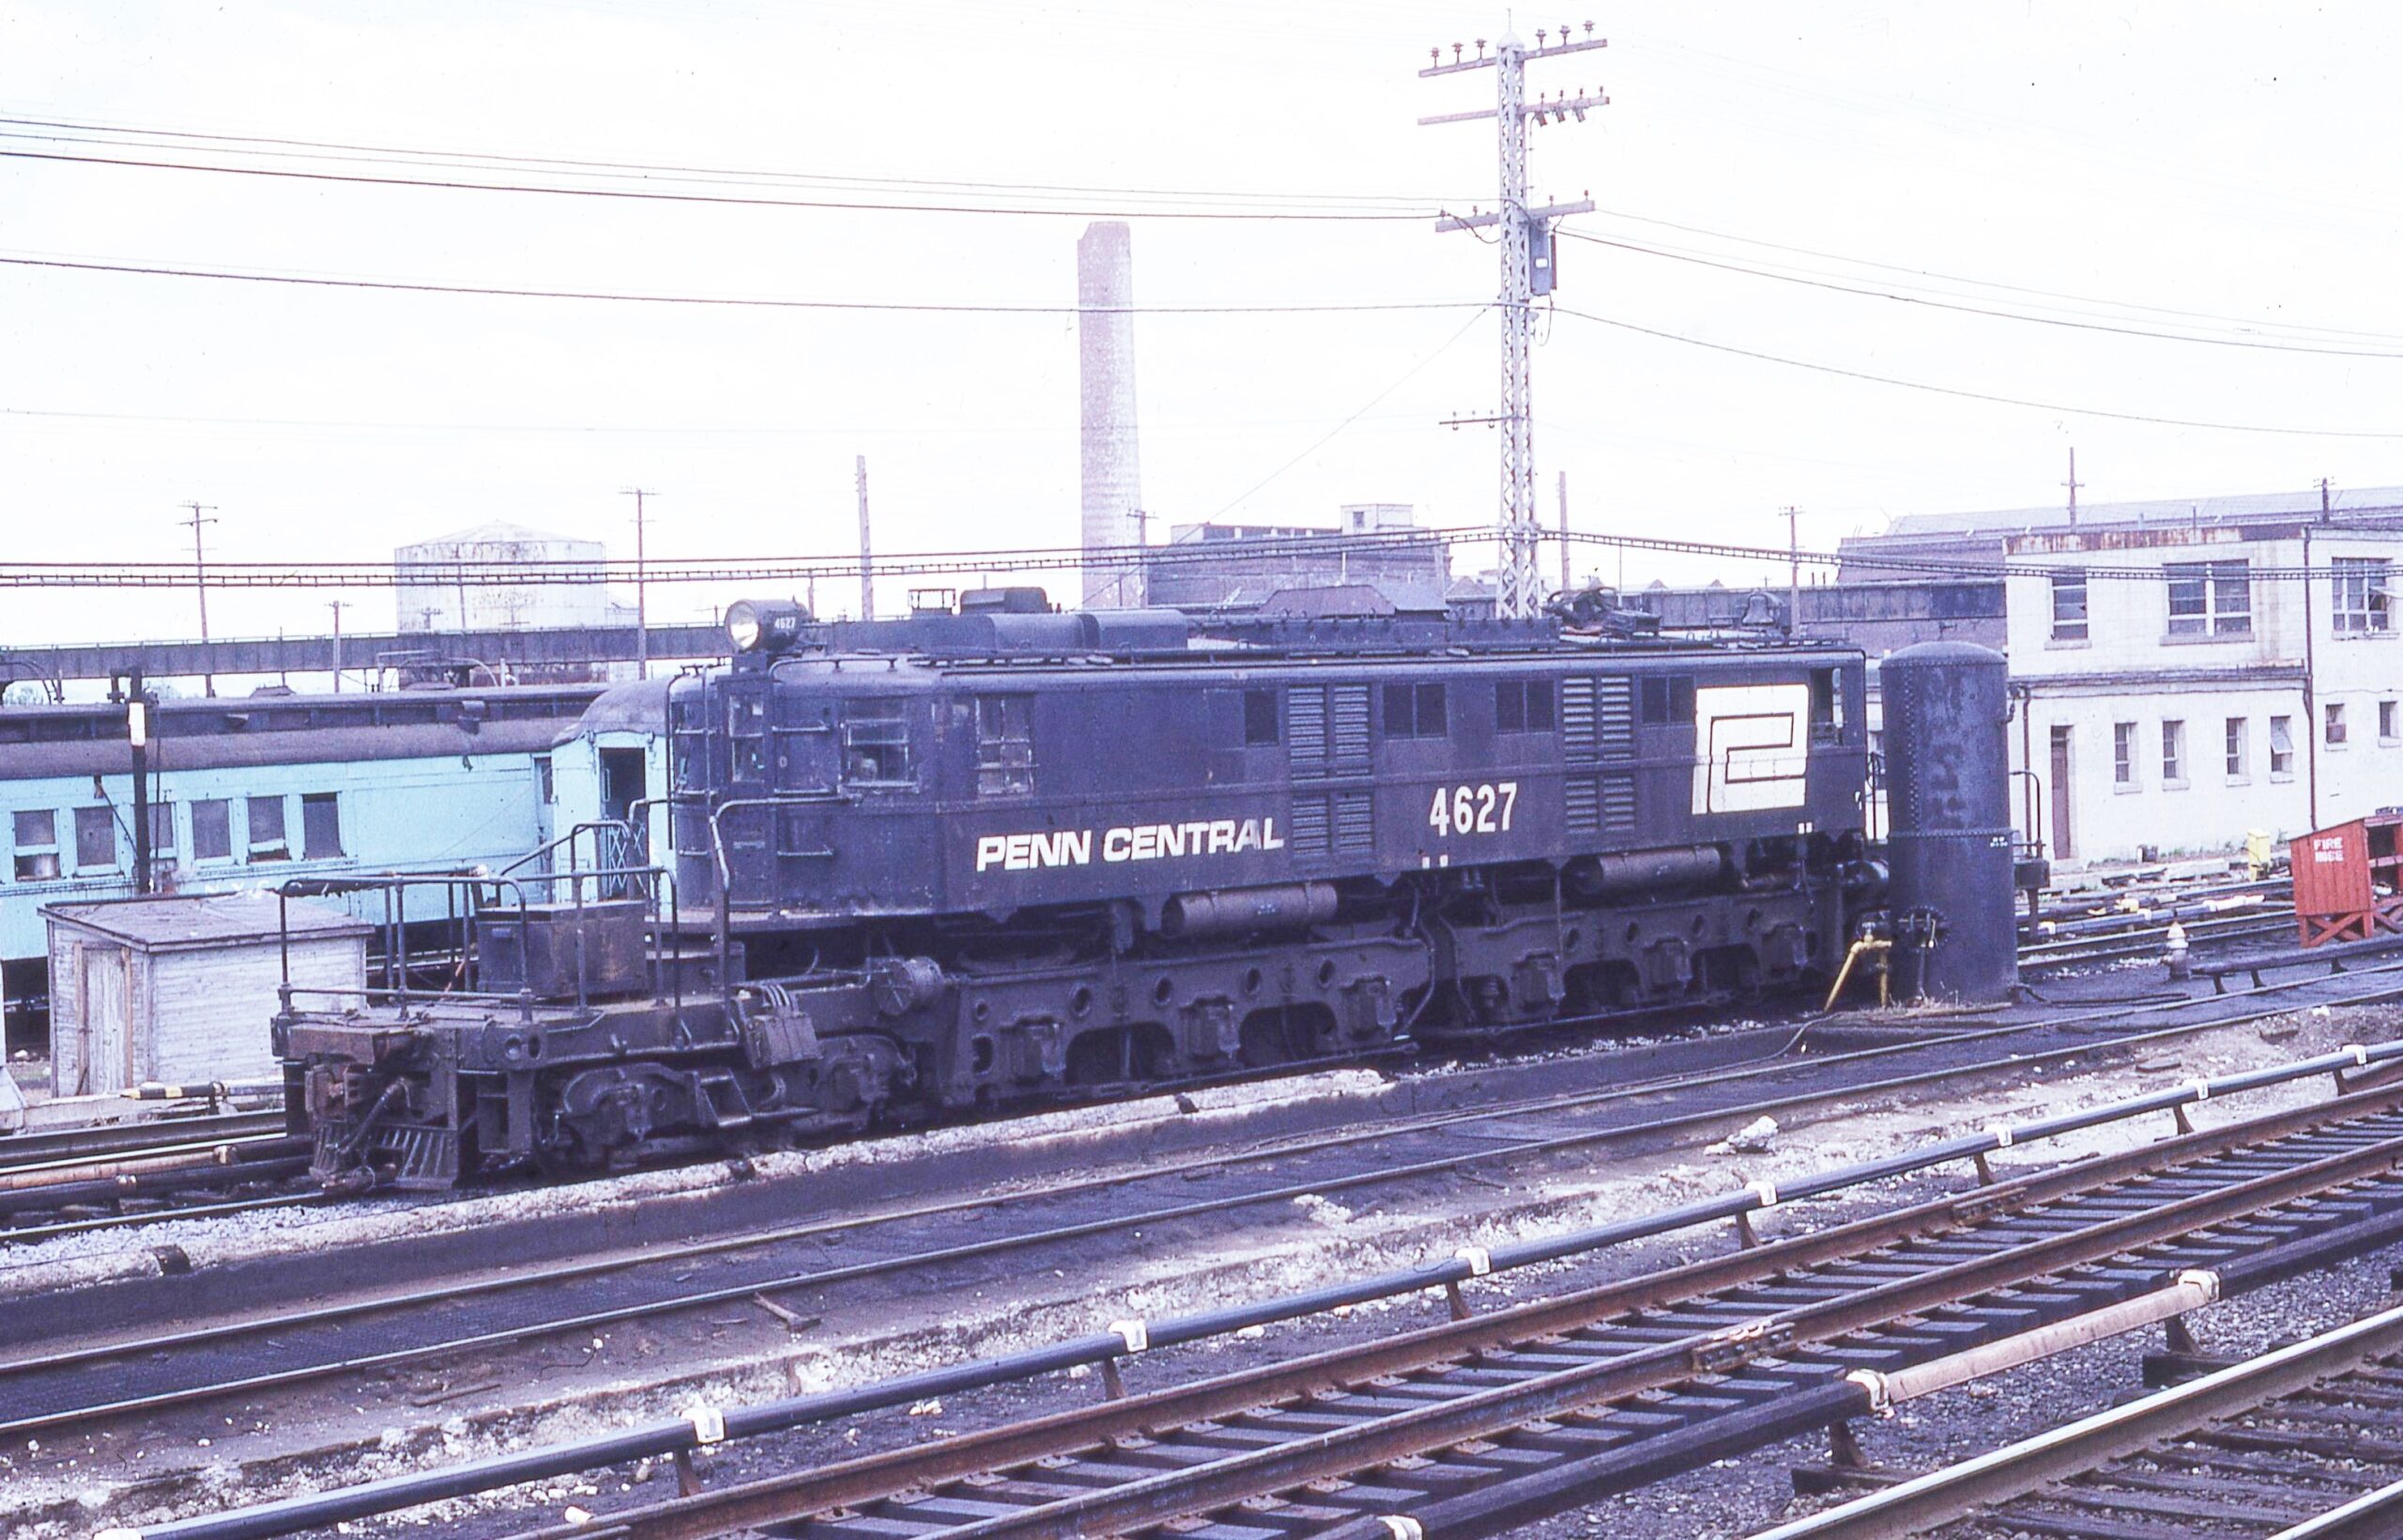 Penn Central | Croton Harmon, New York | P1a 4627 | May 1973 | William Rosenberg Photo